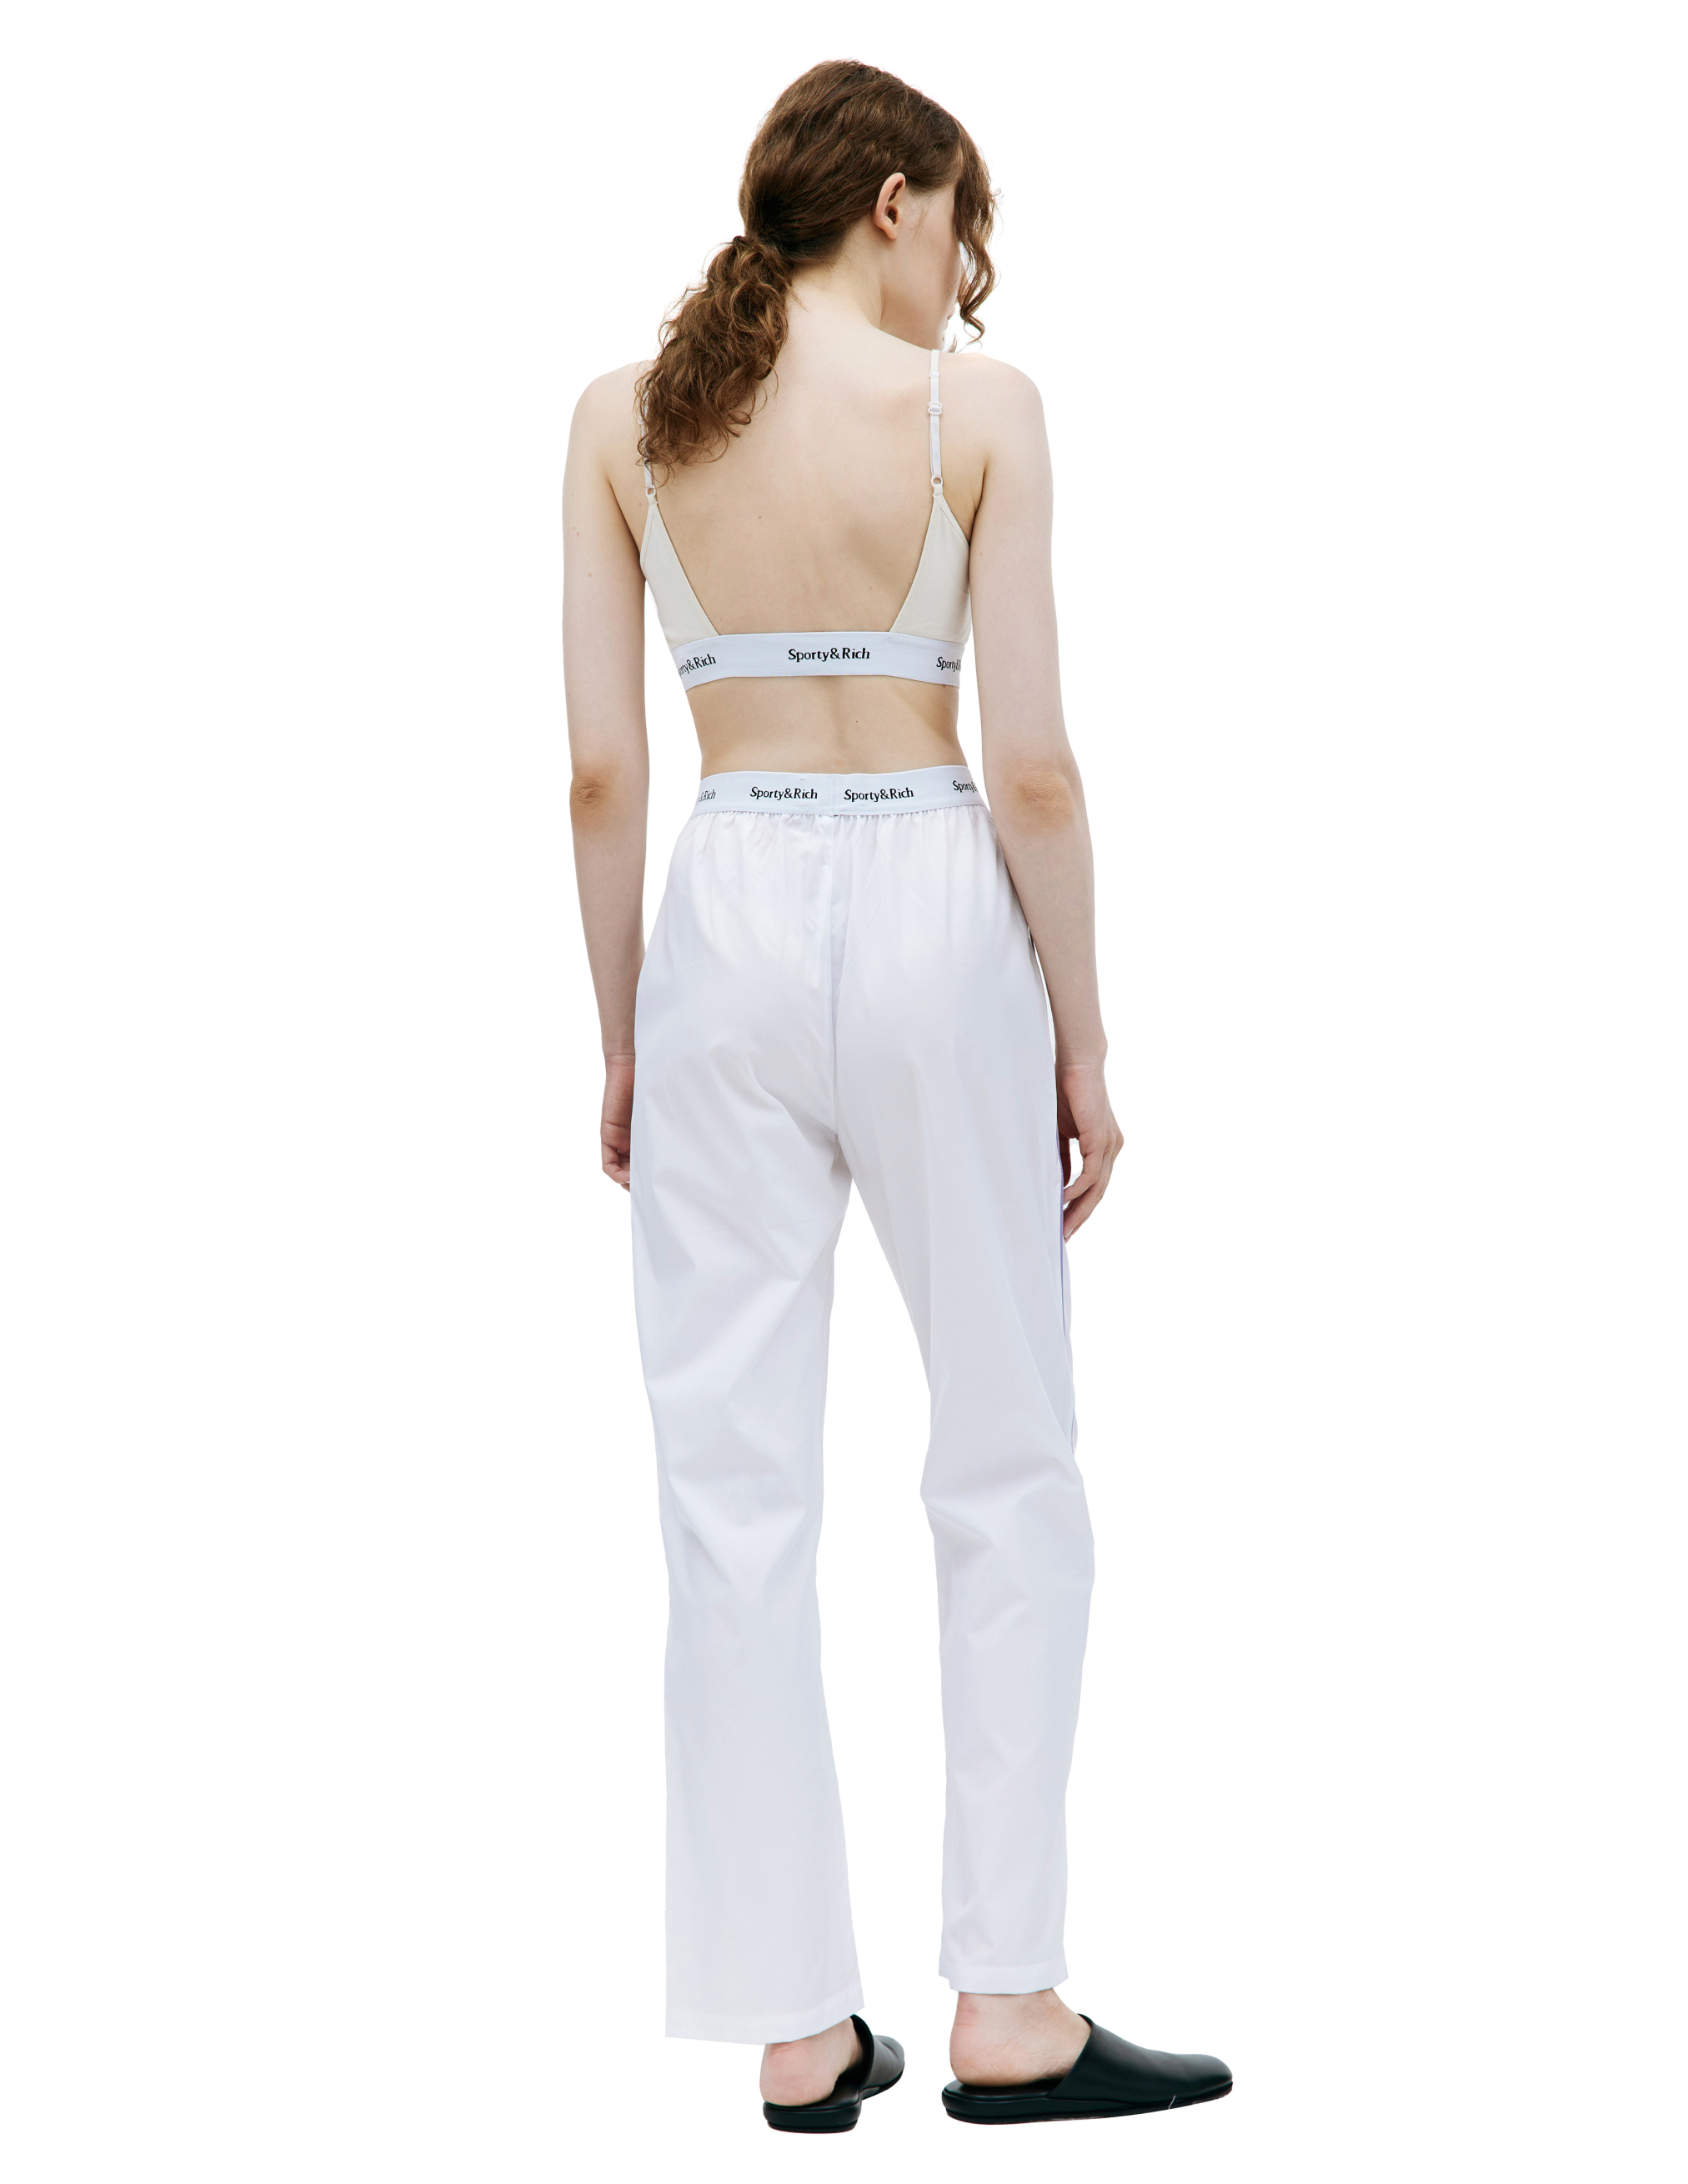 Пижамные брюки Serif на резинке SPORTY & RICH PJ1016WH, размер S;M;L;XL - фото 3